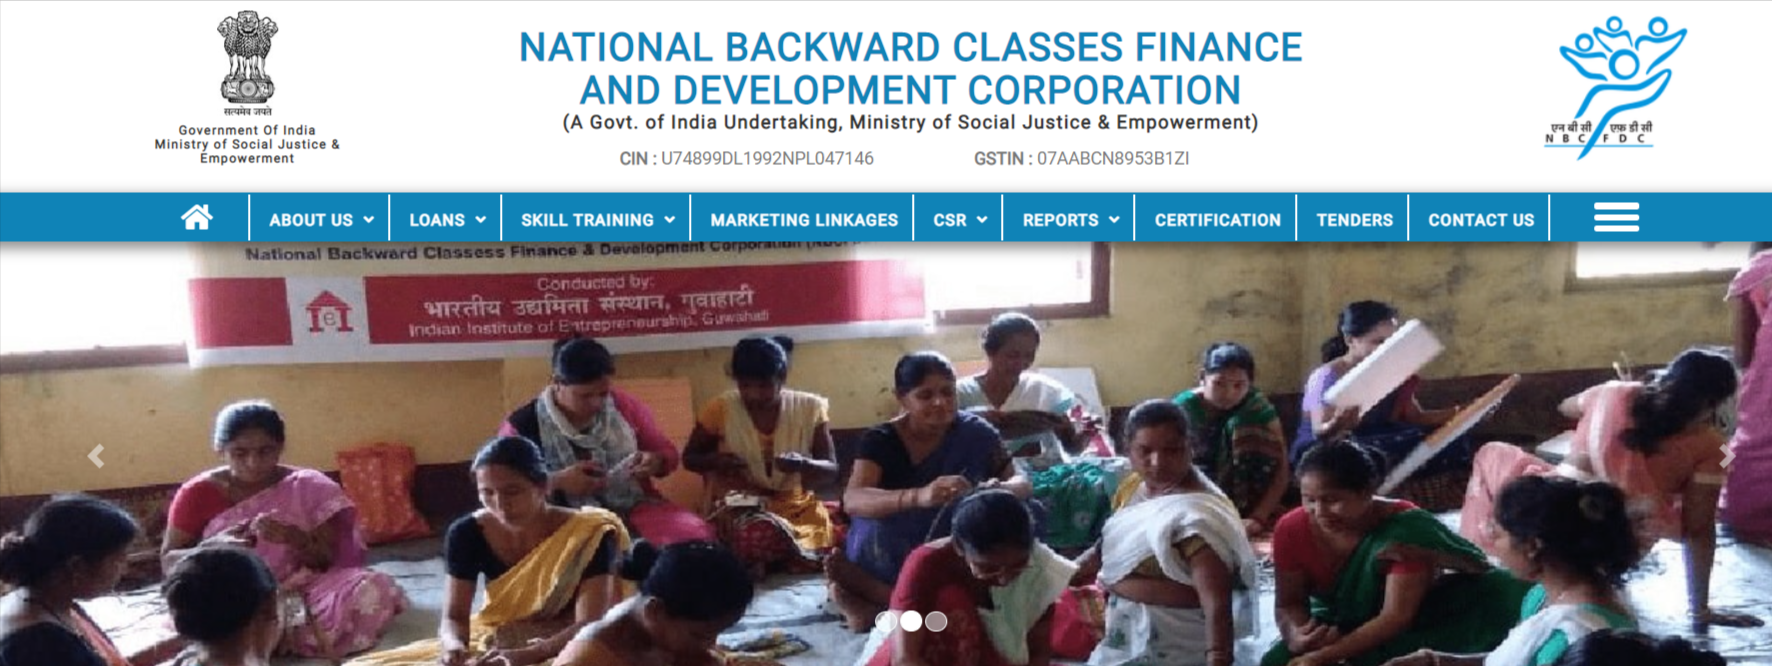 National Backward Classes Finance and Development Corporation (NBCFDC)